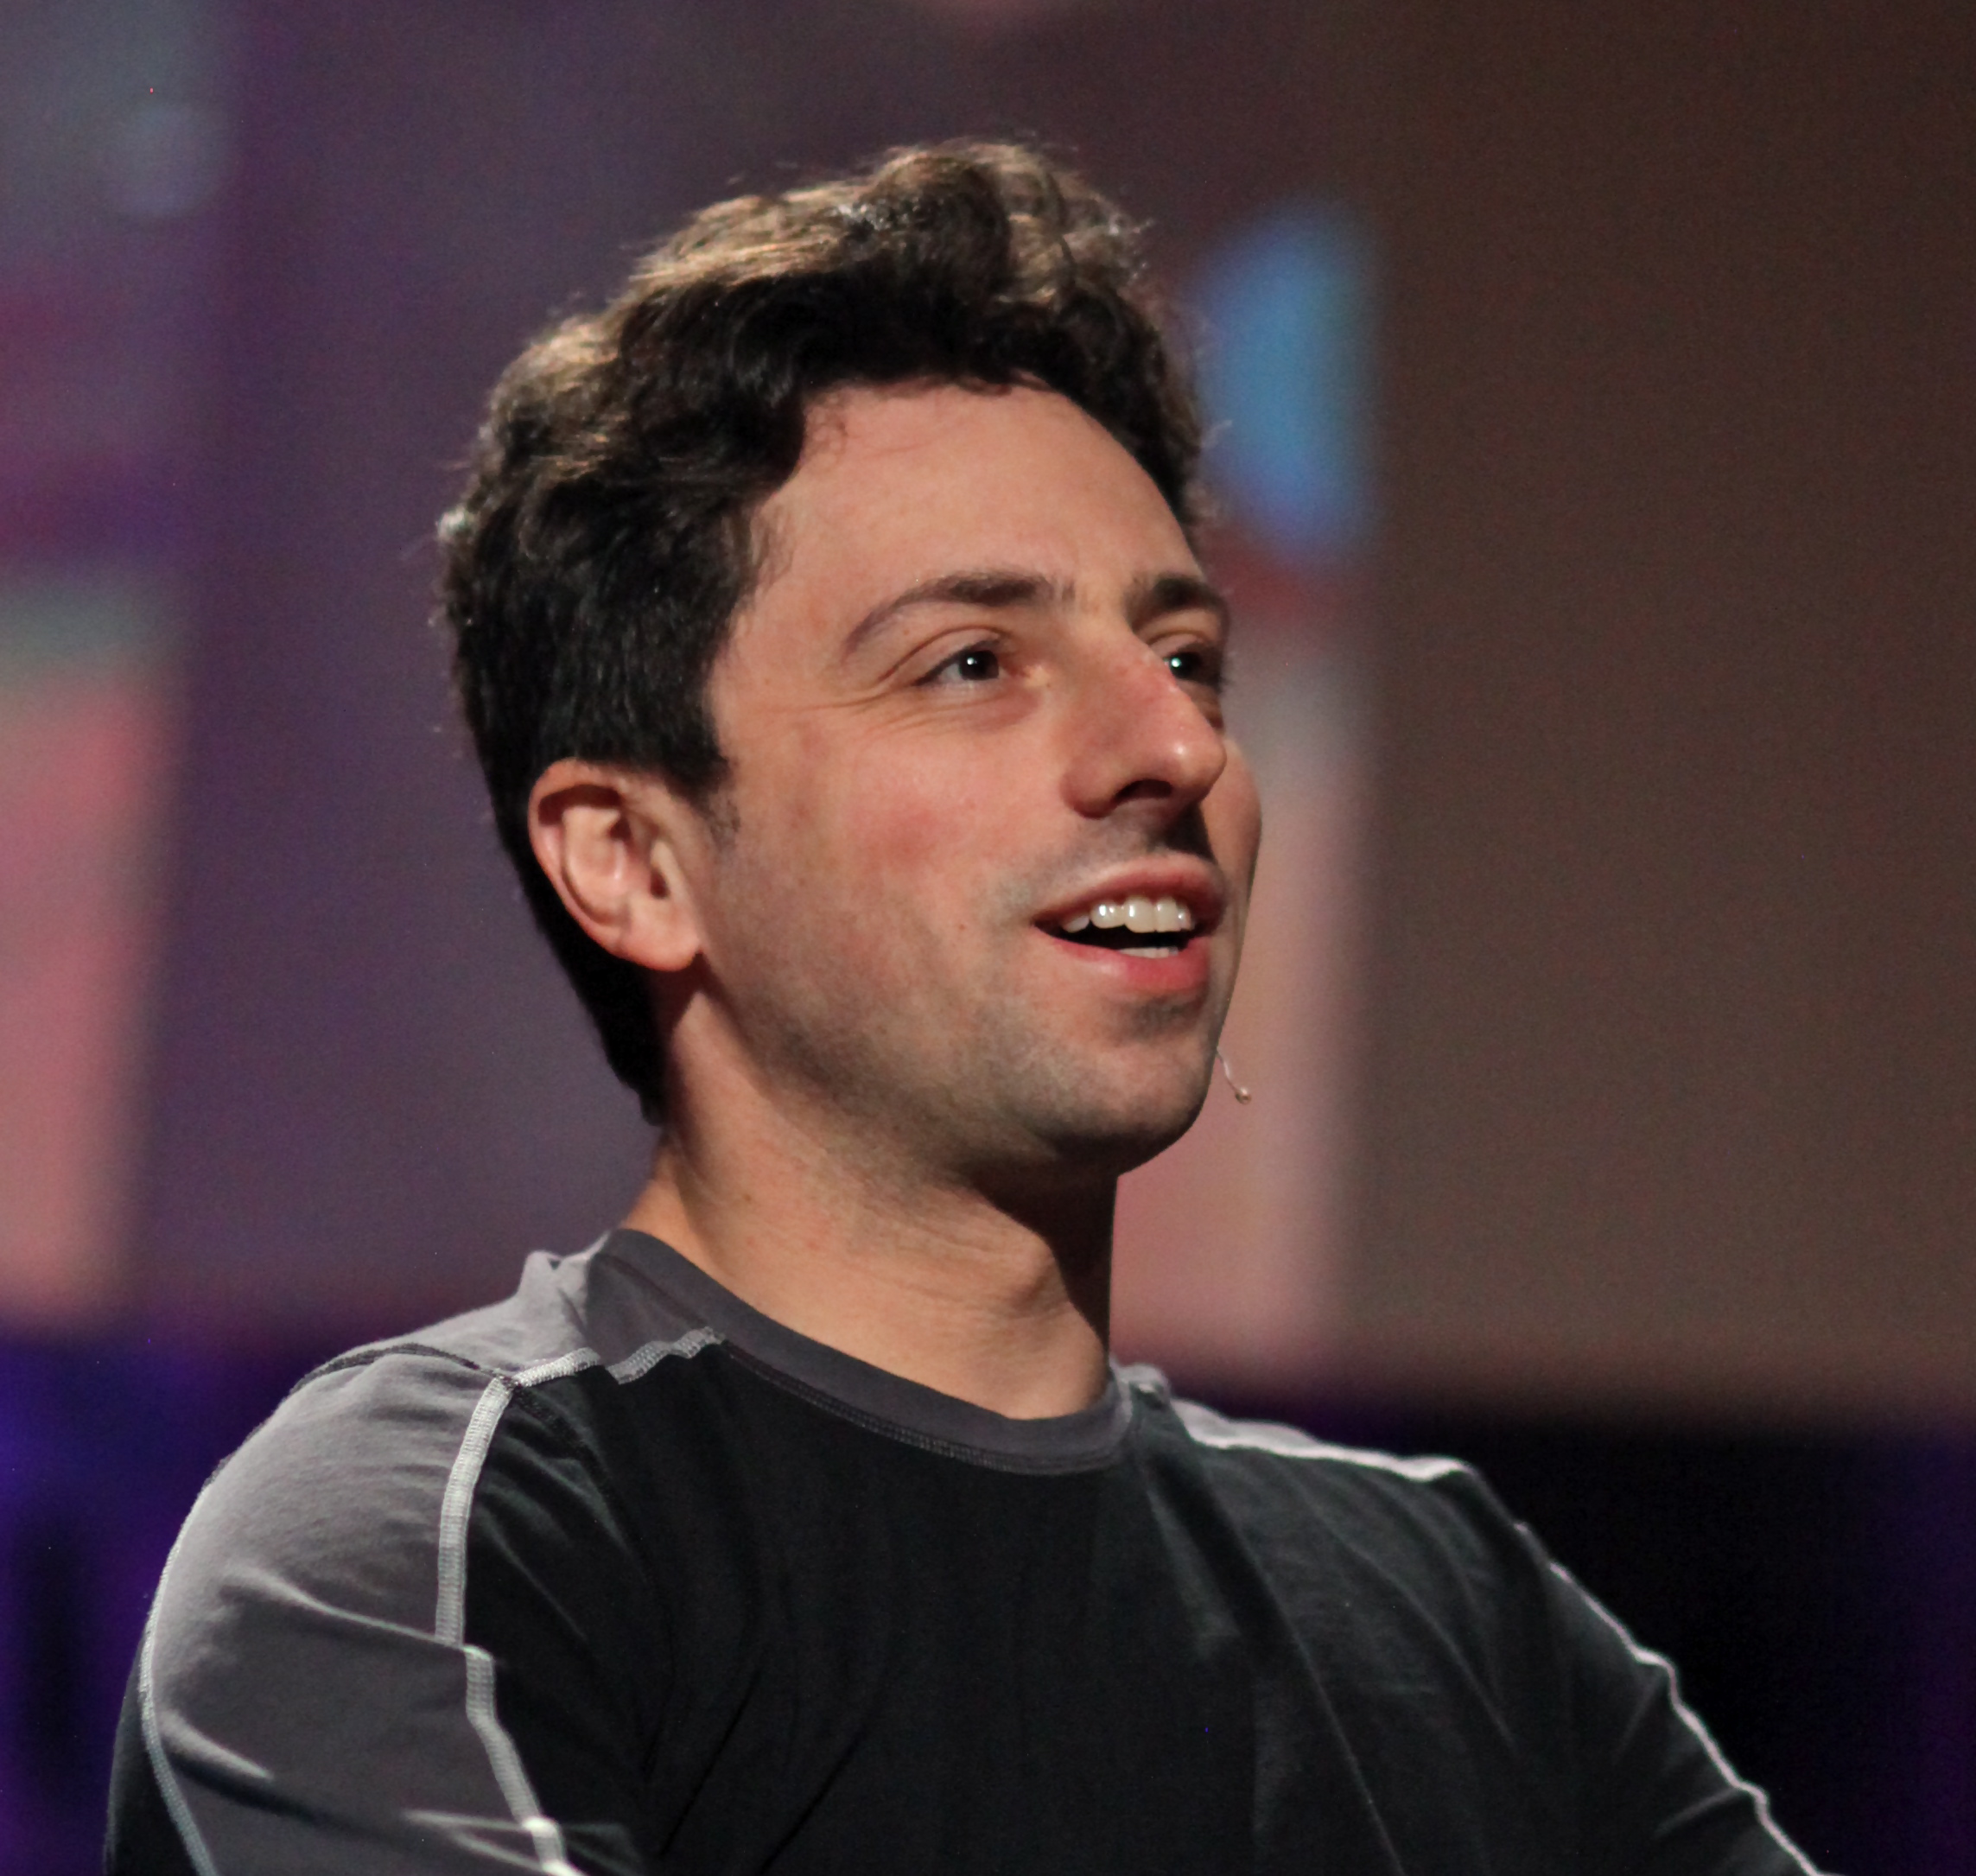 Sergey Brin Ted2000 / Fot. Boseritwik, Flickr.com